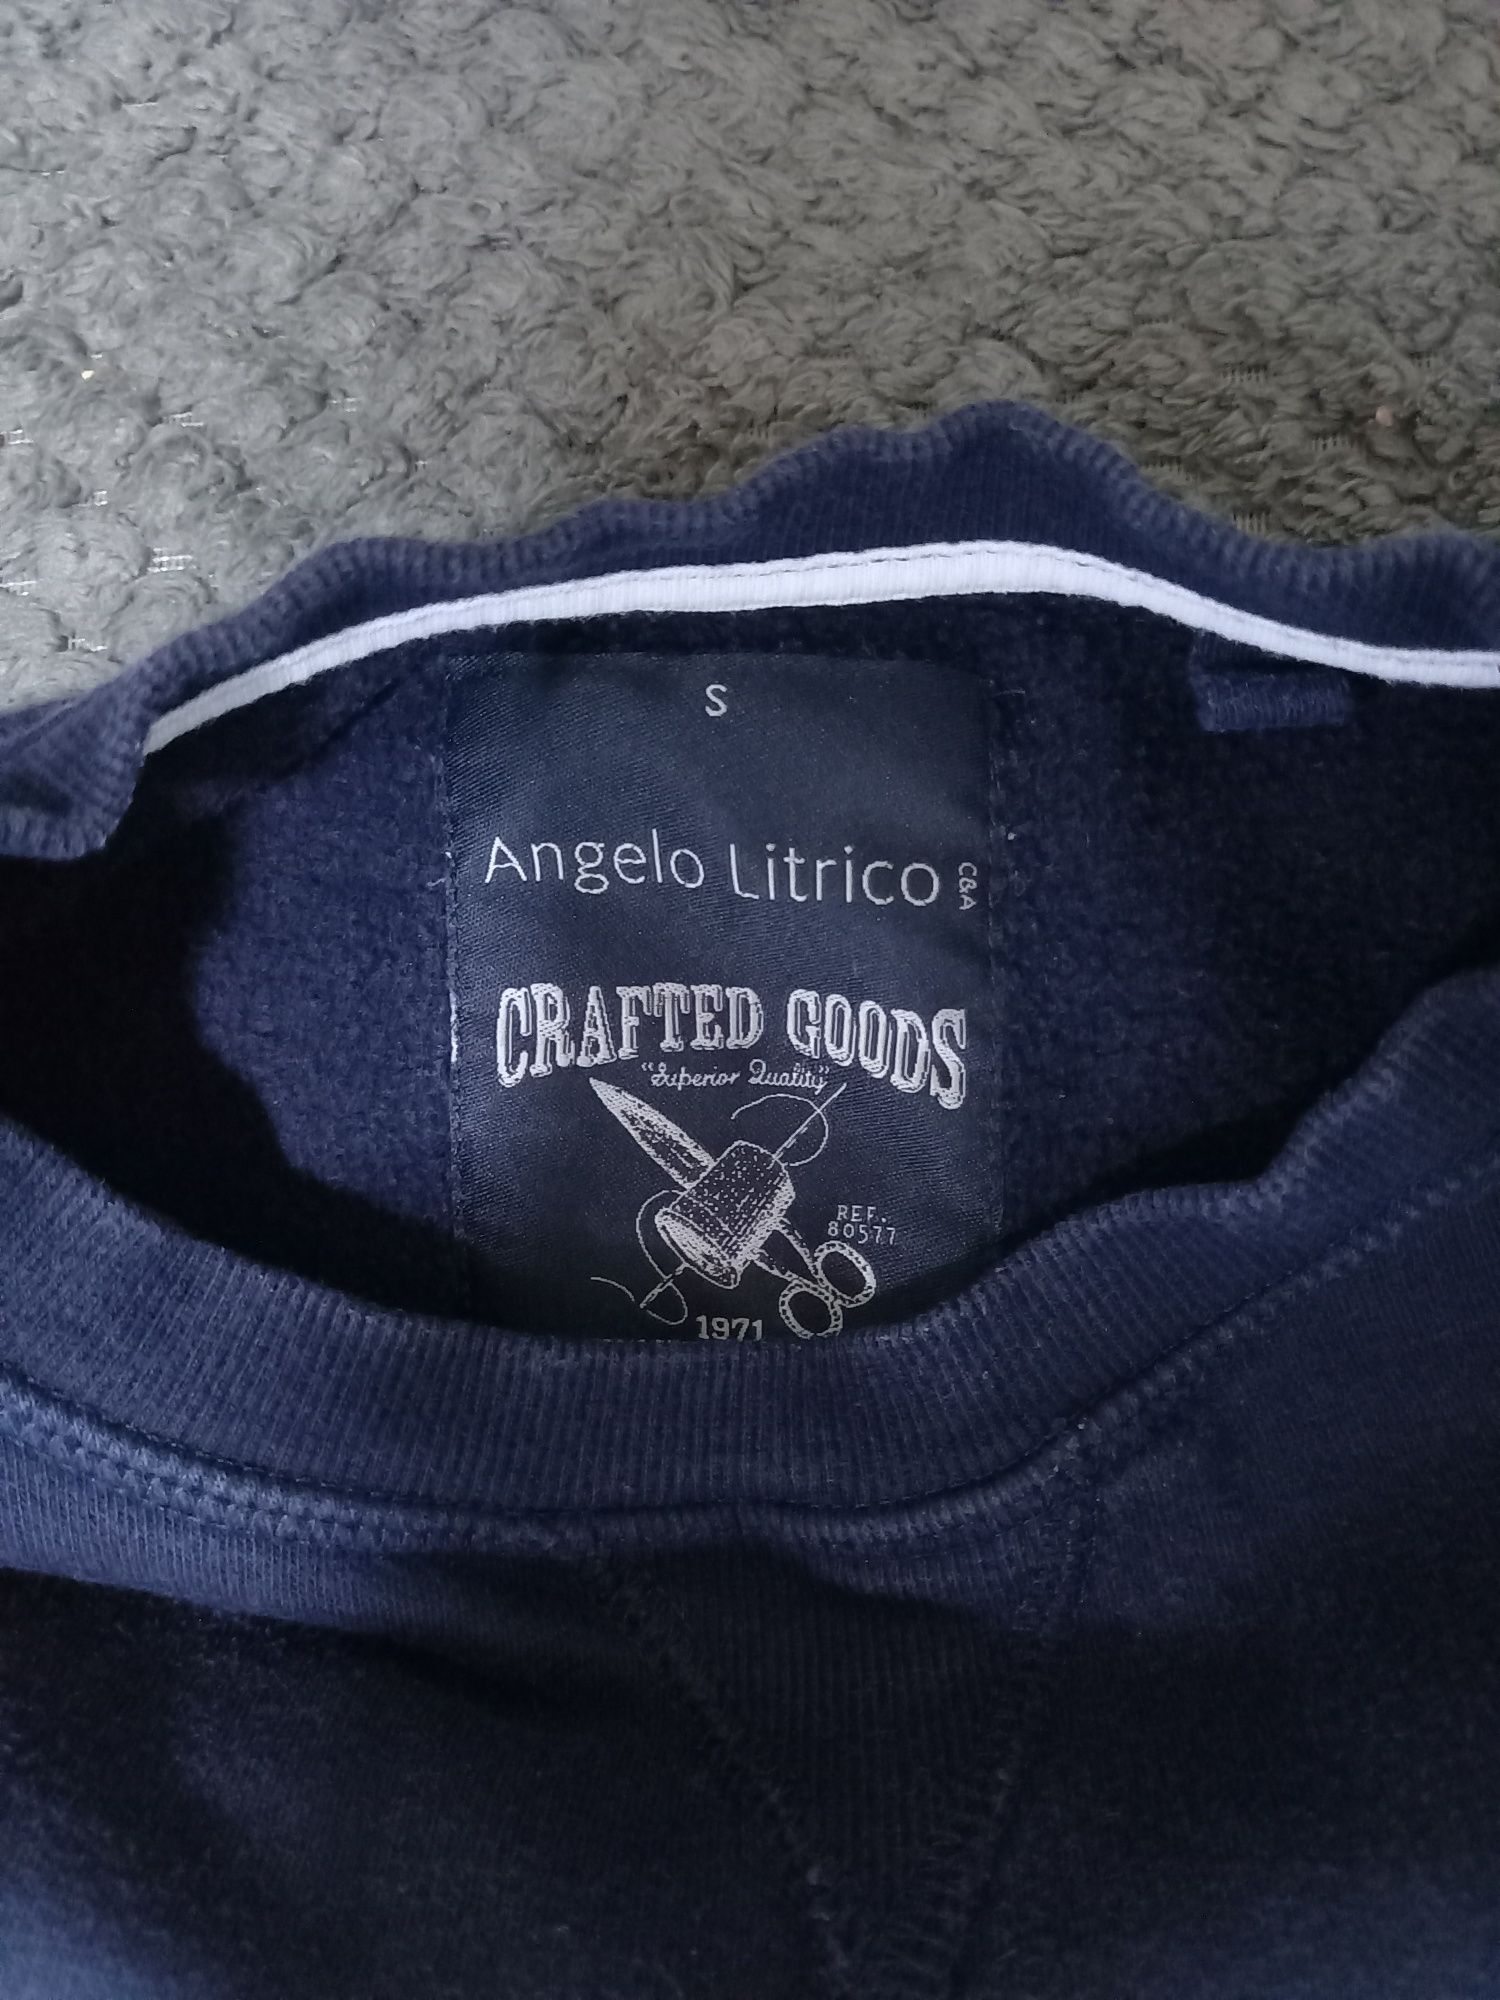 Bluza C&A  Angelo Litrico S/170 chłopiec